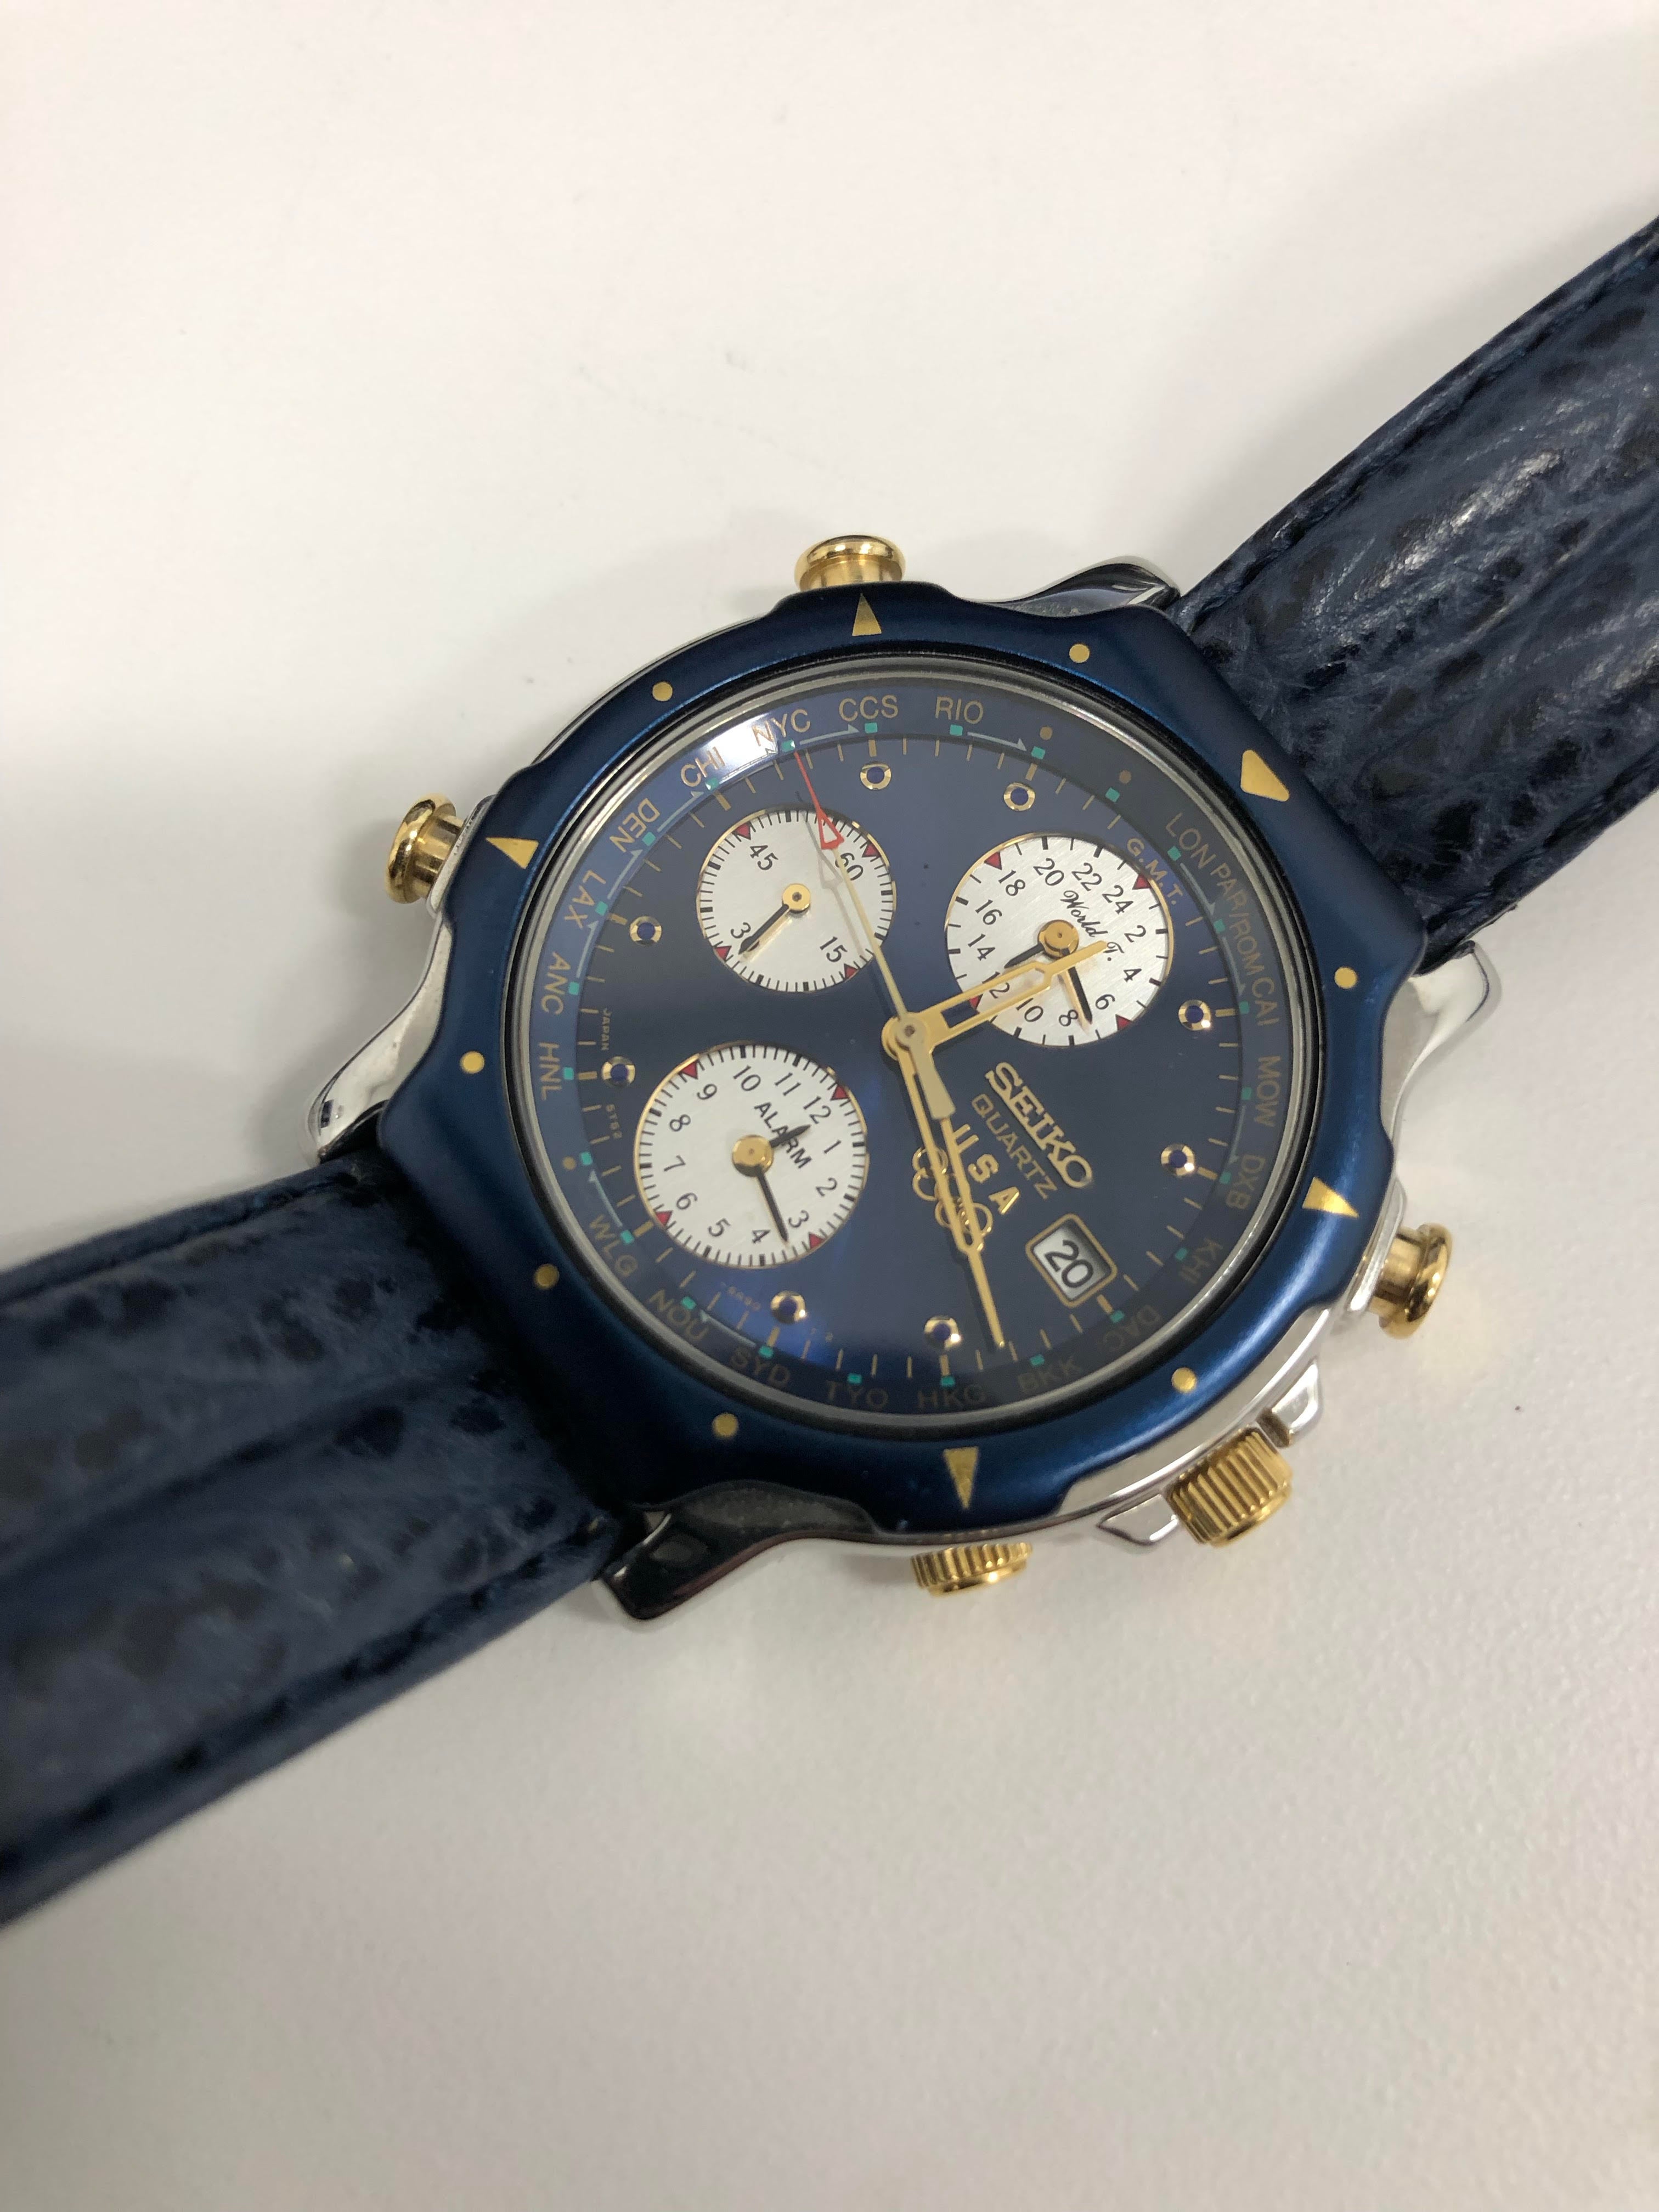 FS: Seiko 1991 Olympic Quartz watch. 5T52-6B09 in great shape! | WatchUSeek  Watch Forums